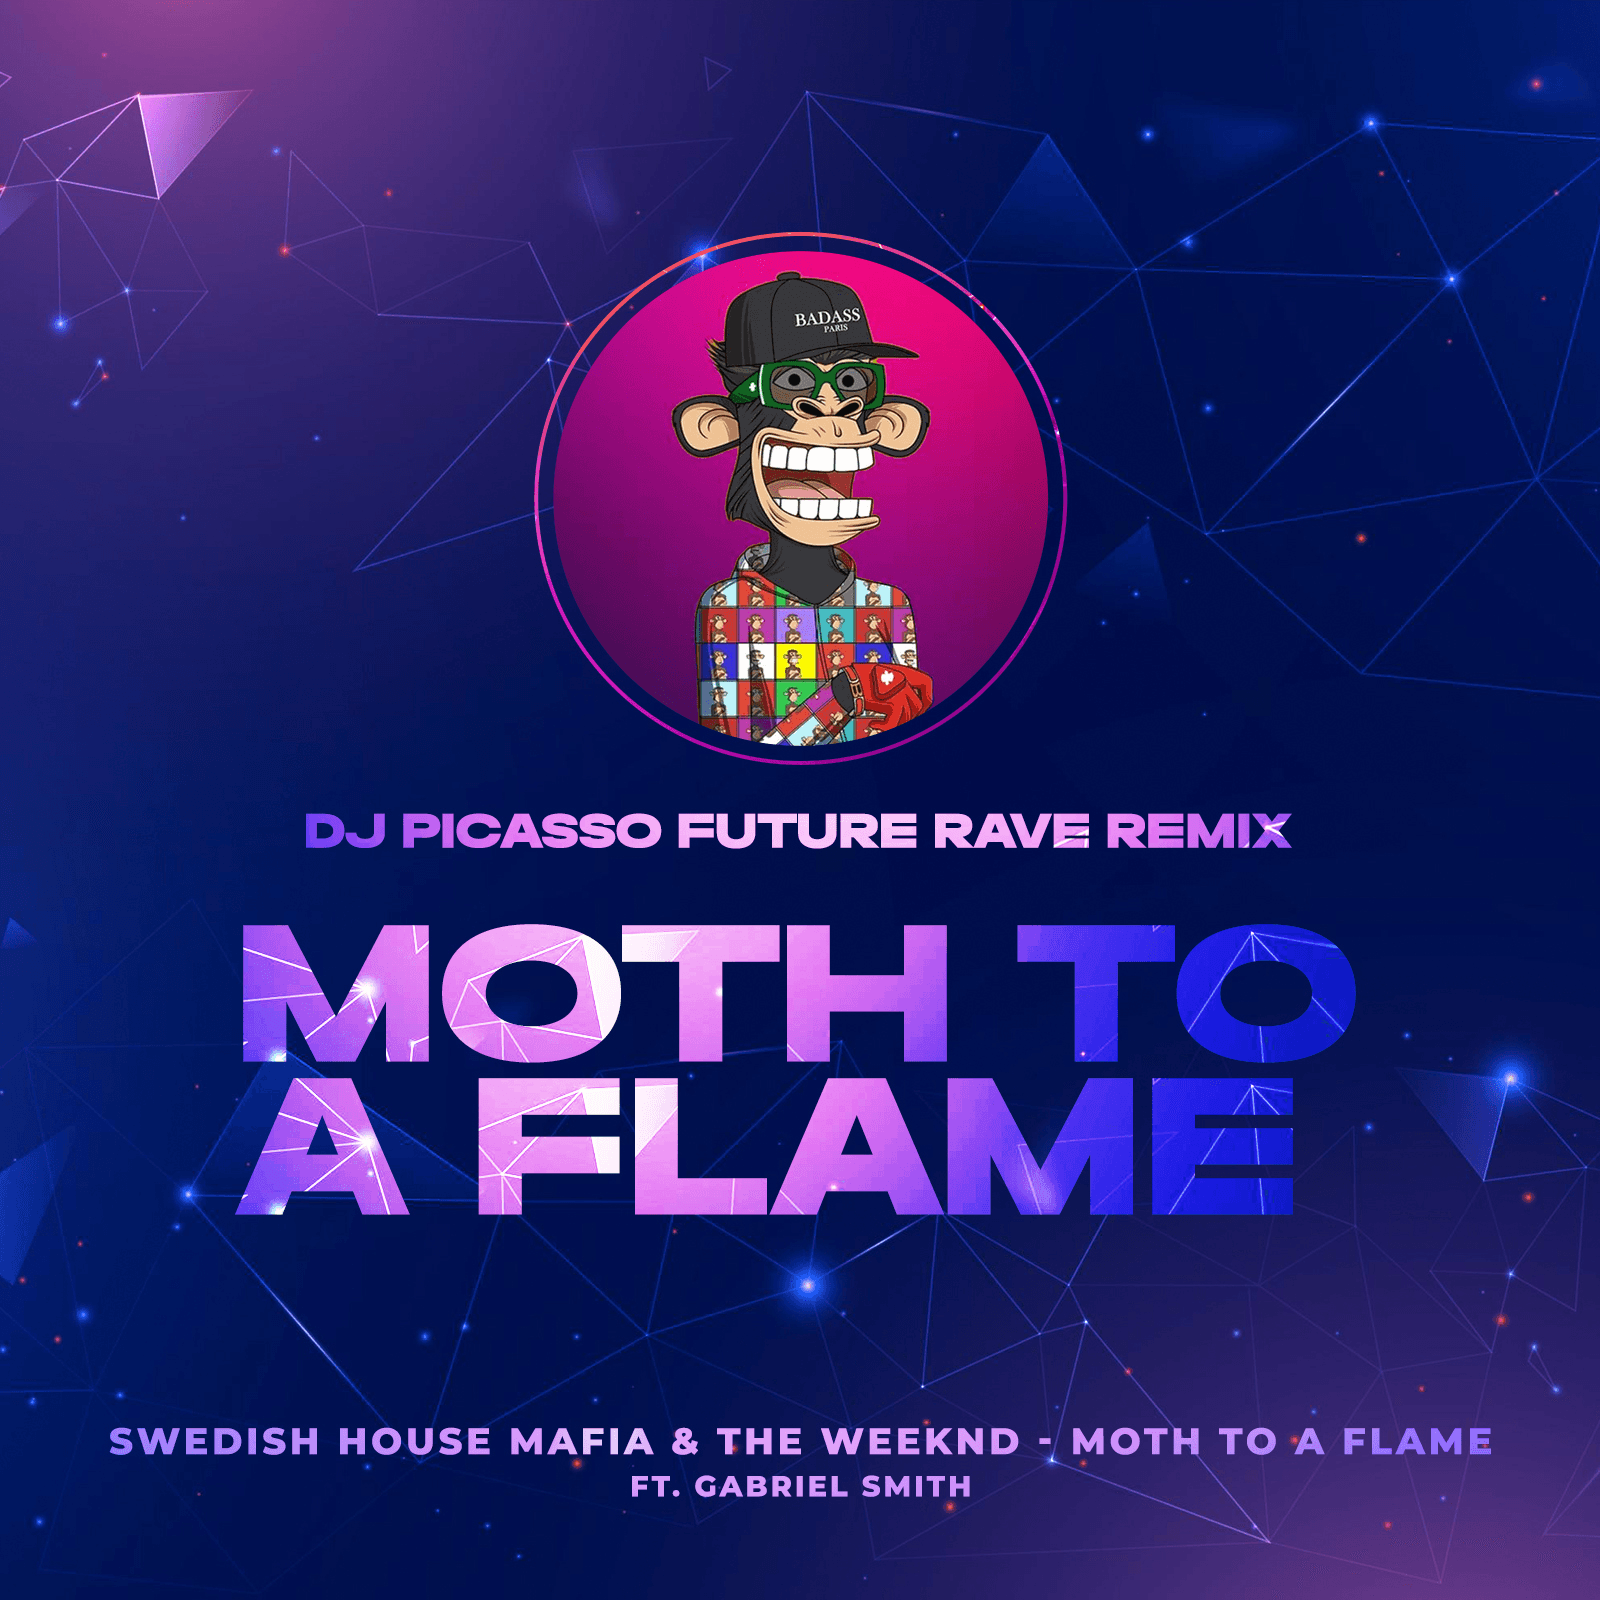 DJ PICASSO - MOTH TO A FLAME REMIX